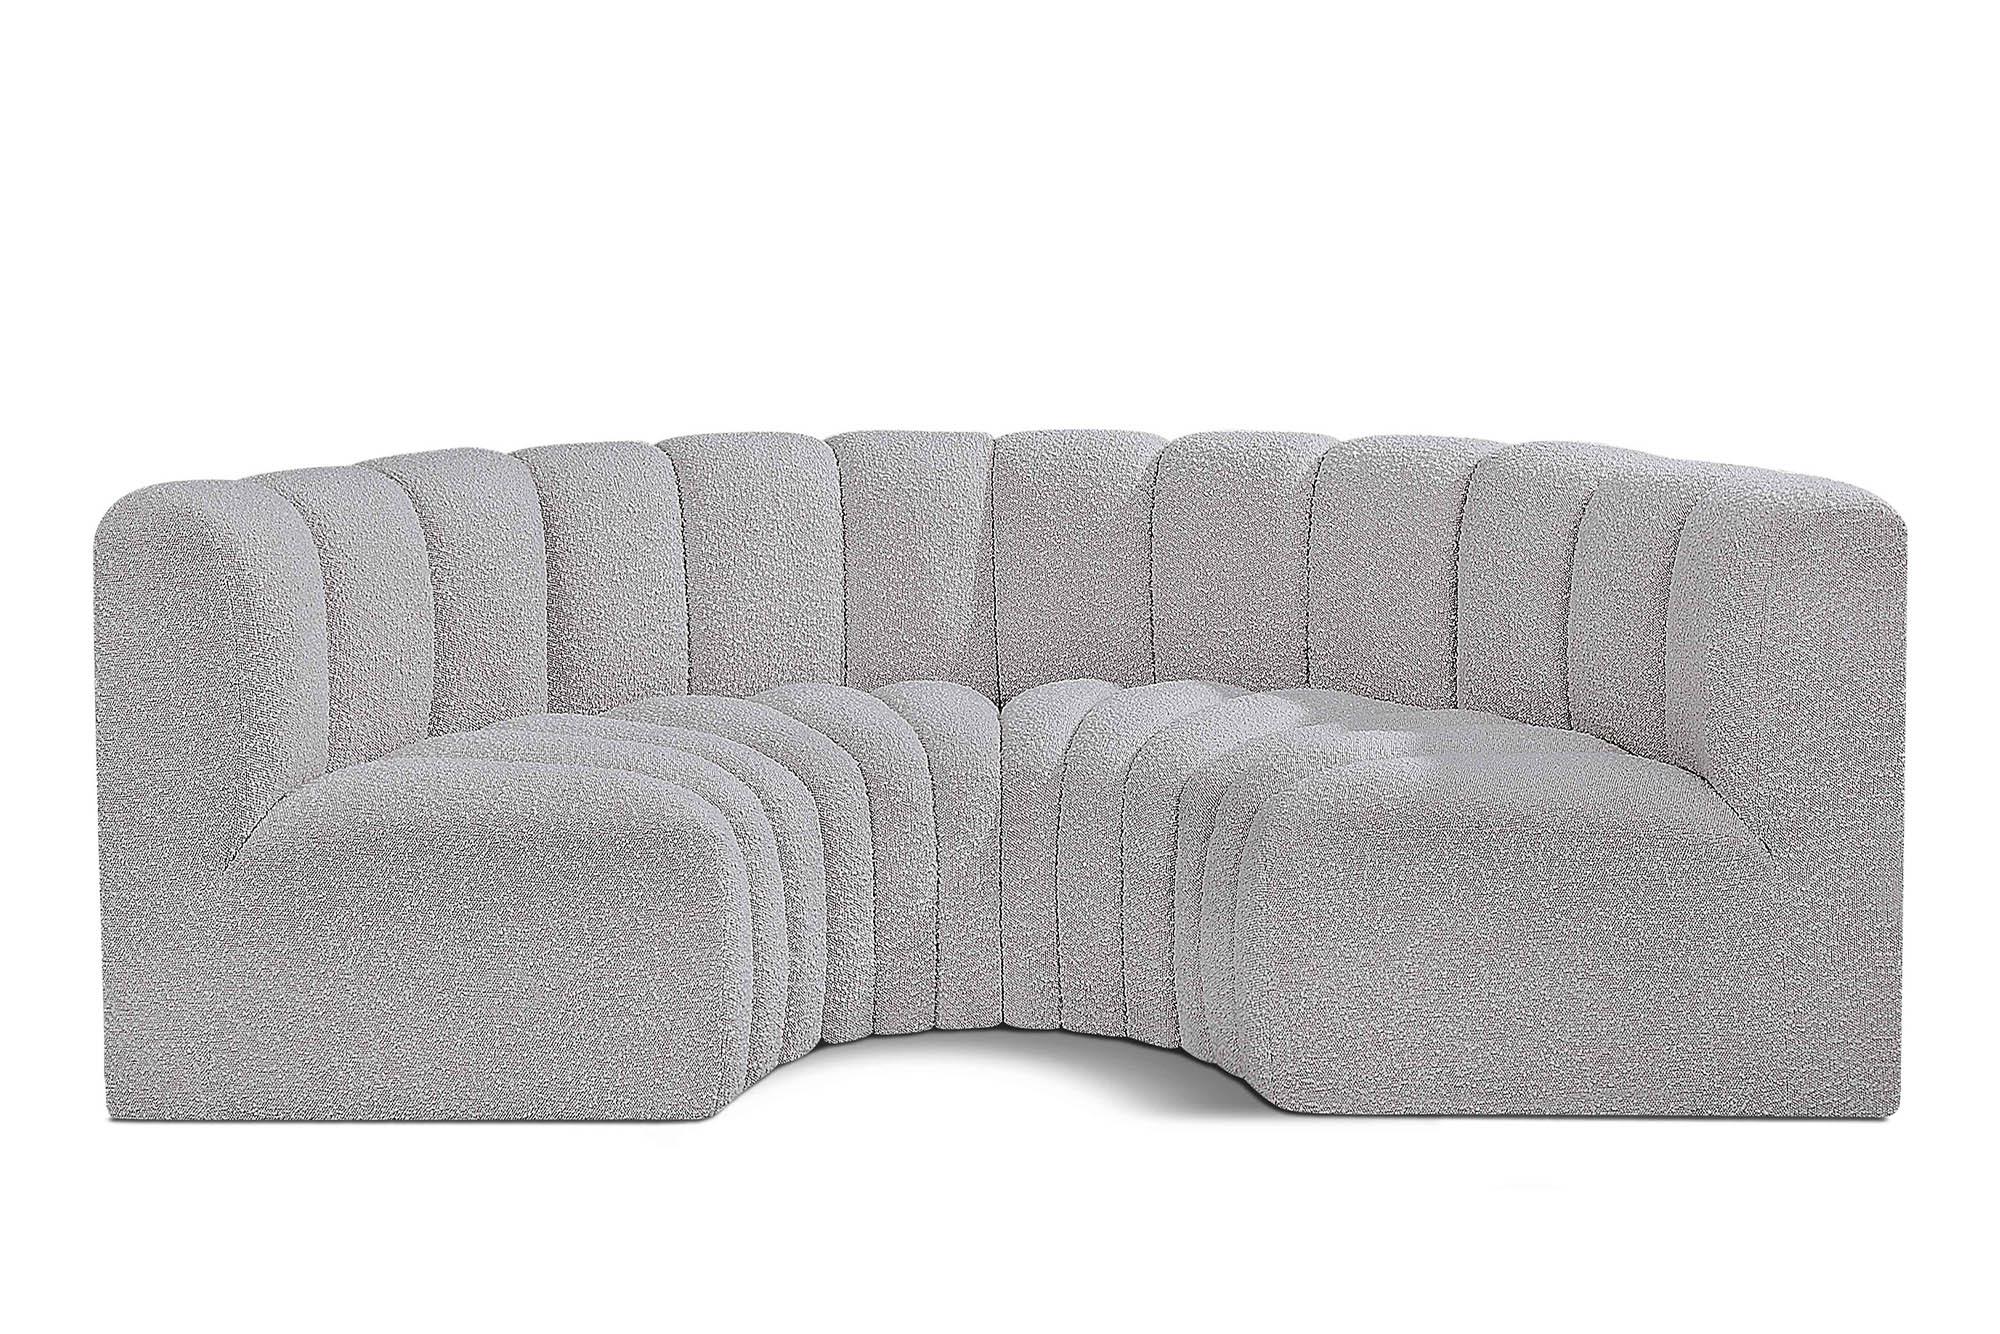 Contemporary, Modern Modular Sectional Sofa ARC 102Grey-S4C 102Grey-S4C in Gray 